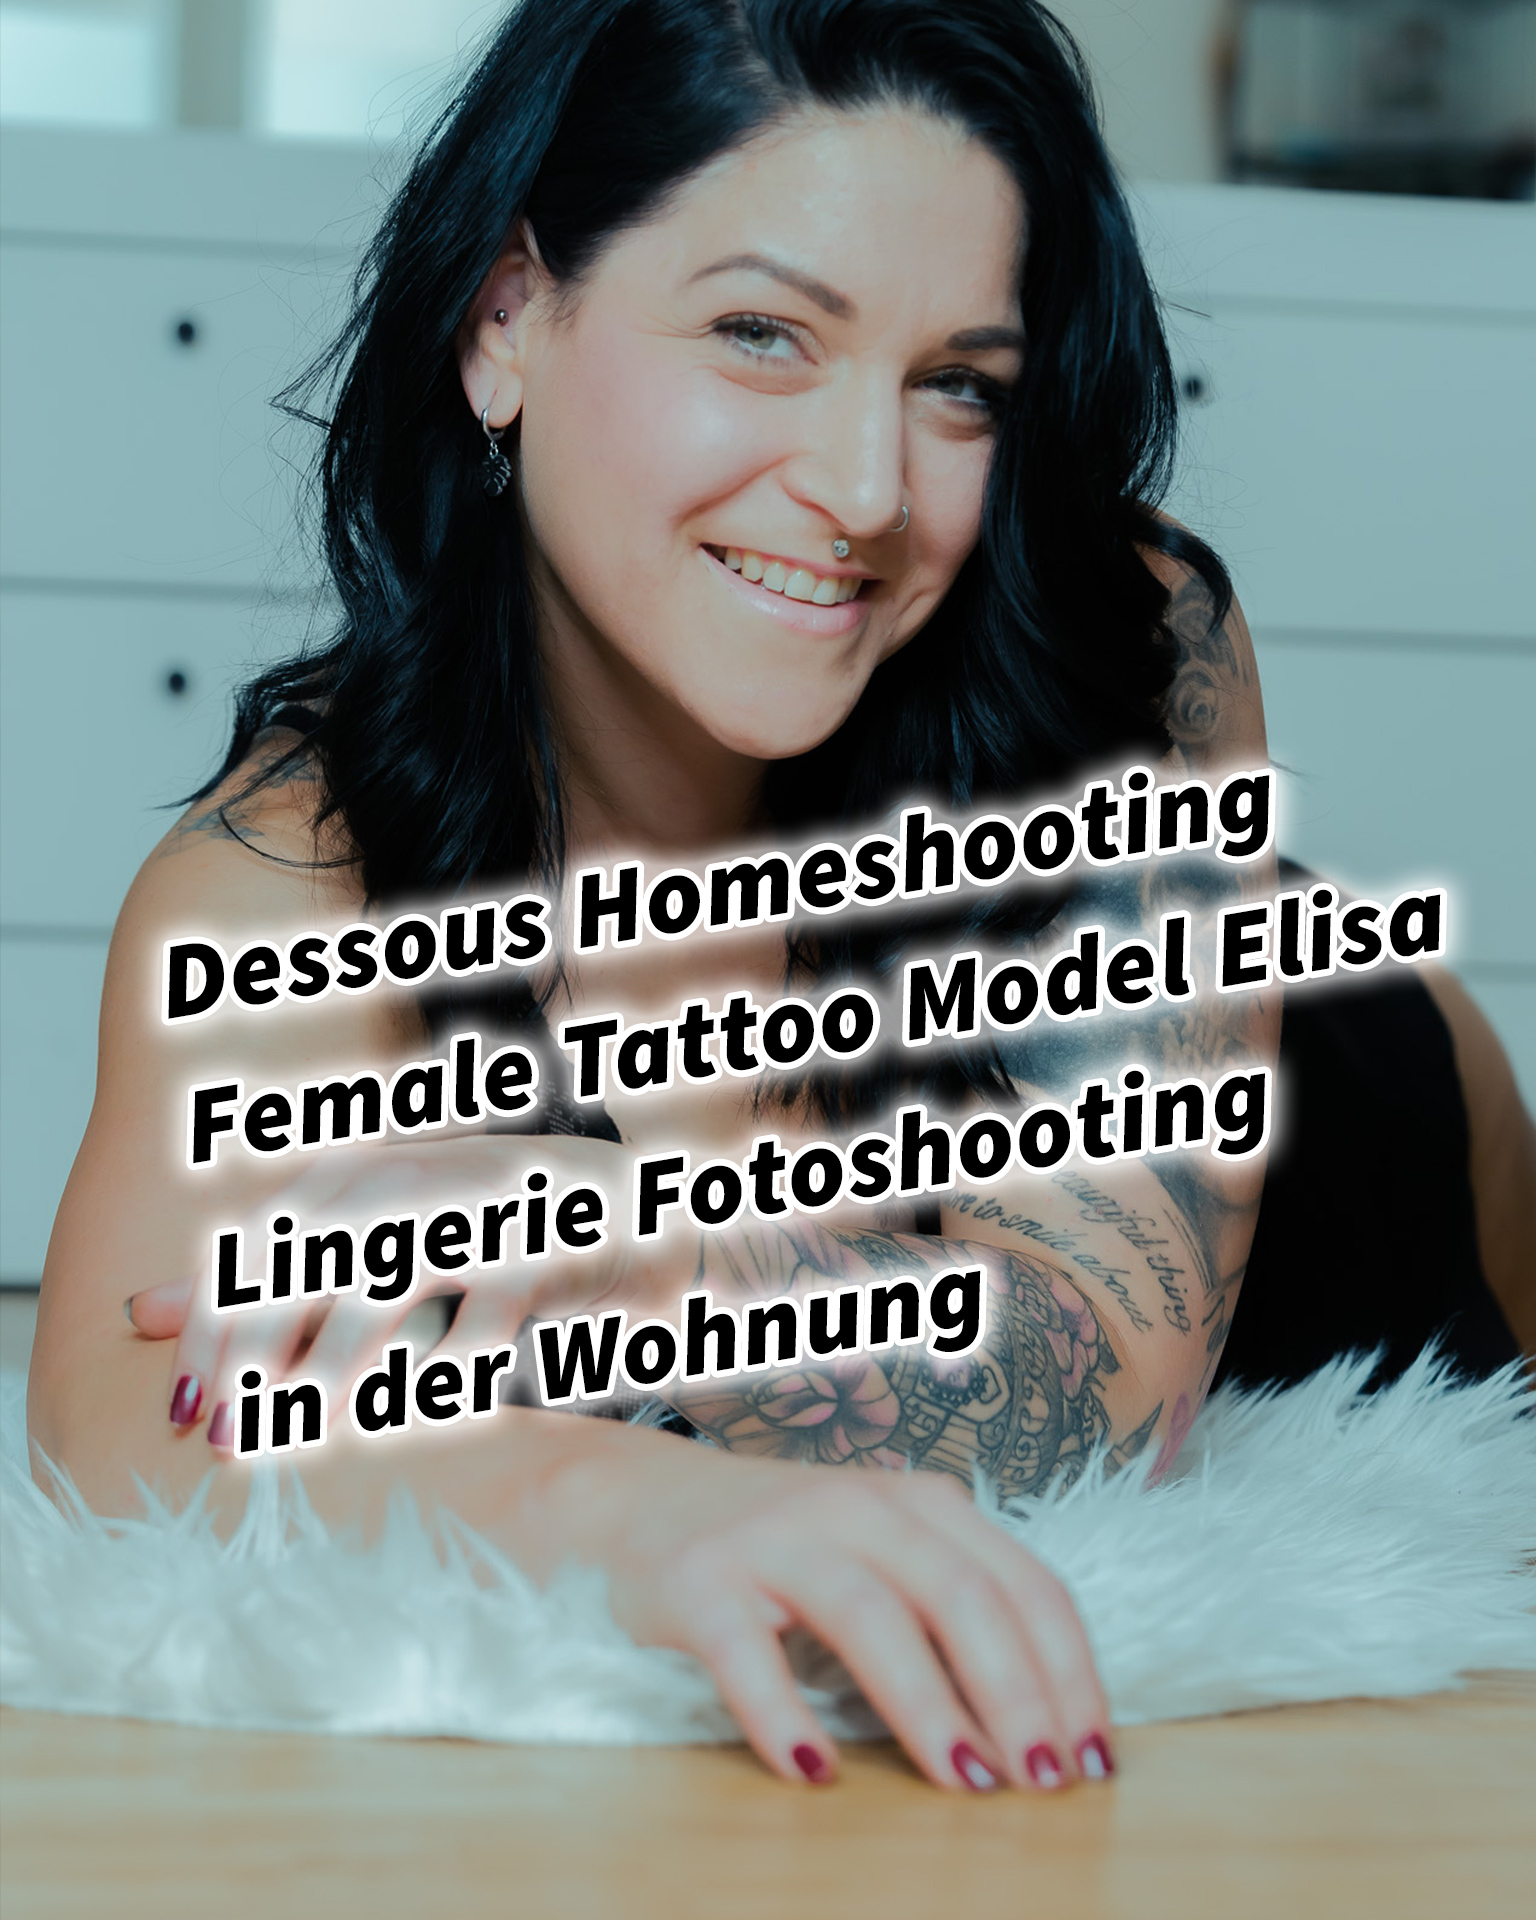 Dessous Homeshooting Female Tattoo Model Elisa Lingerie Fotoshooting in der Wohnung